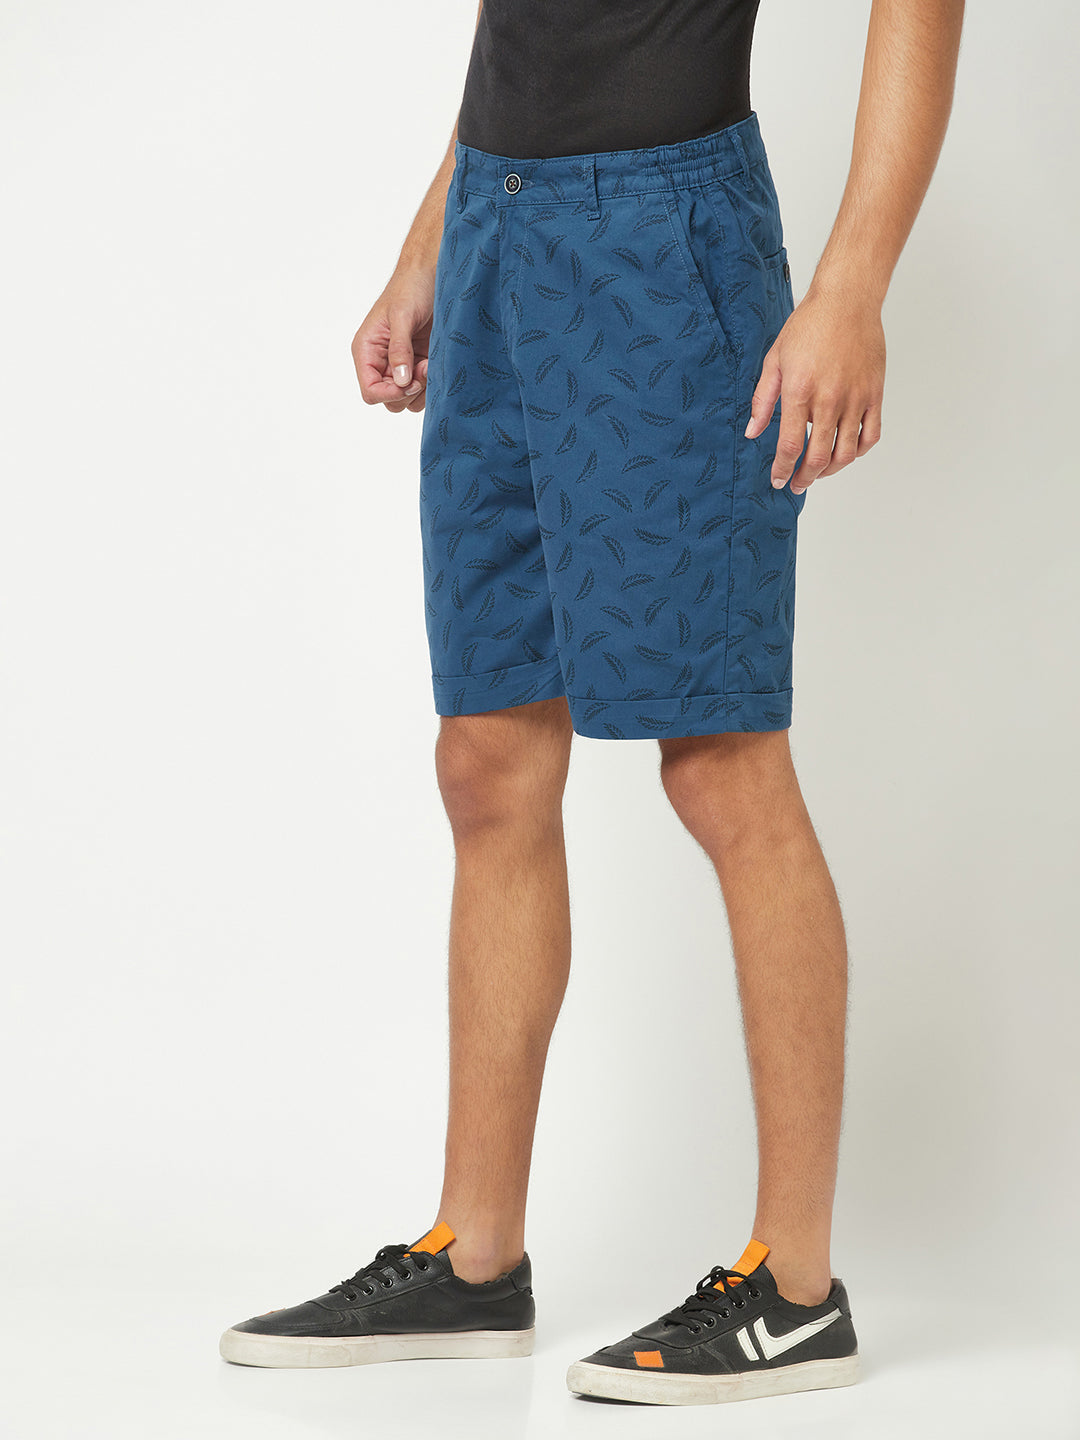 Deep Blue Floral Shorts